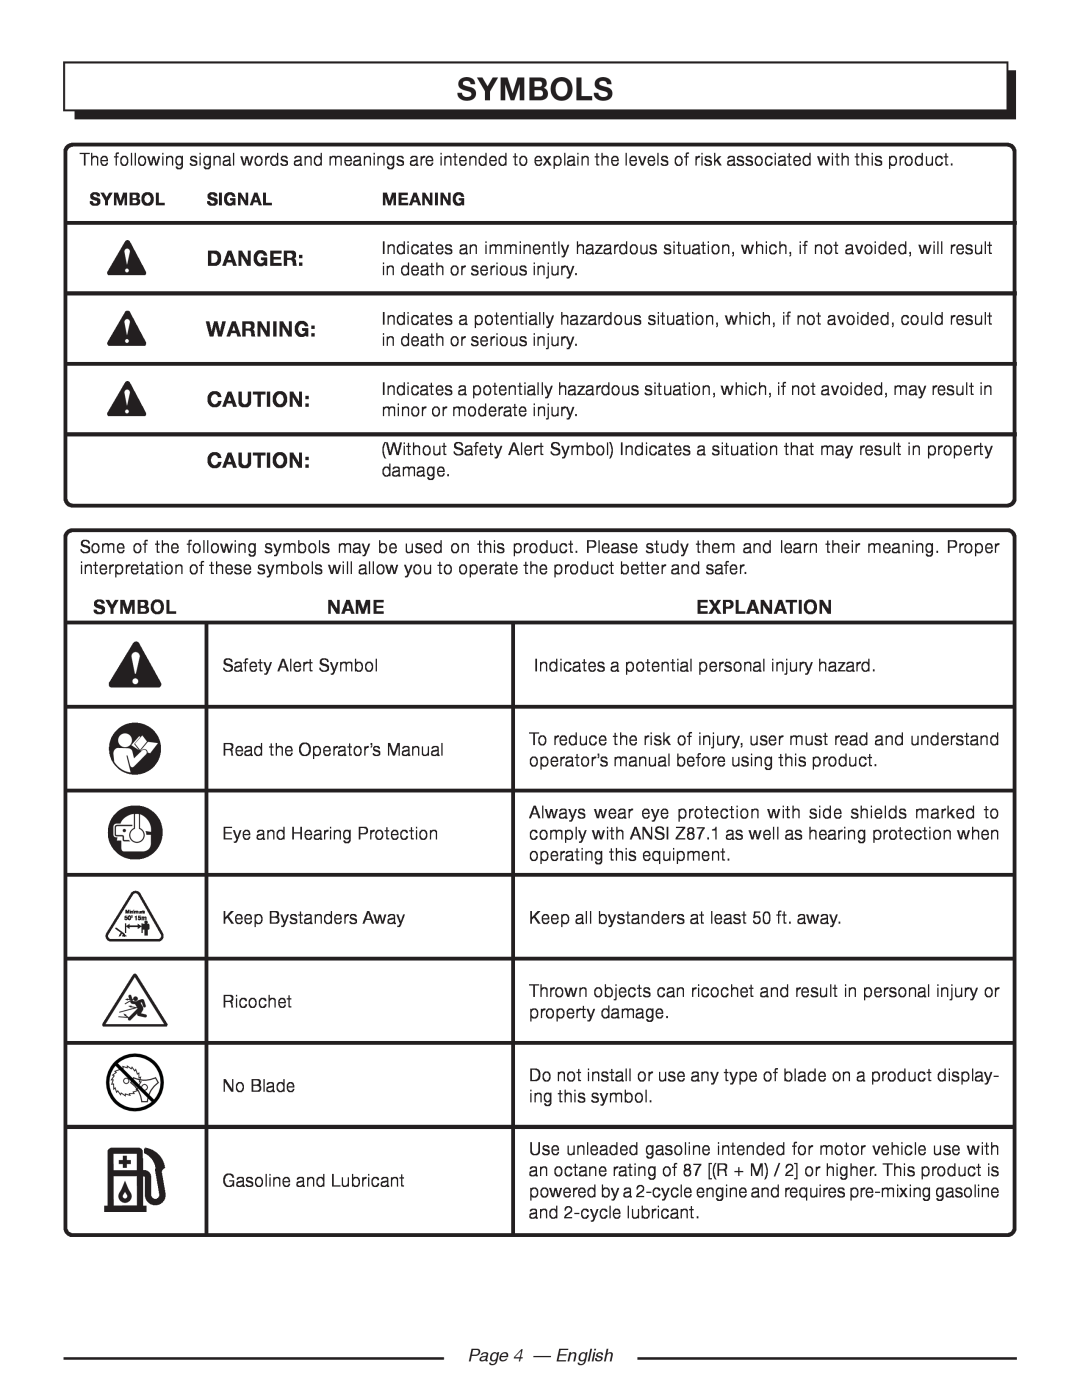 Homelite UT21006 manuel dutilisation Symbols, Danger, Name, Explanation, Signal, Meaning, Page 4 - English 